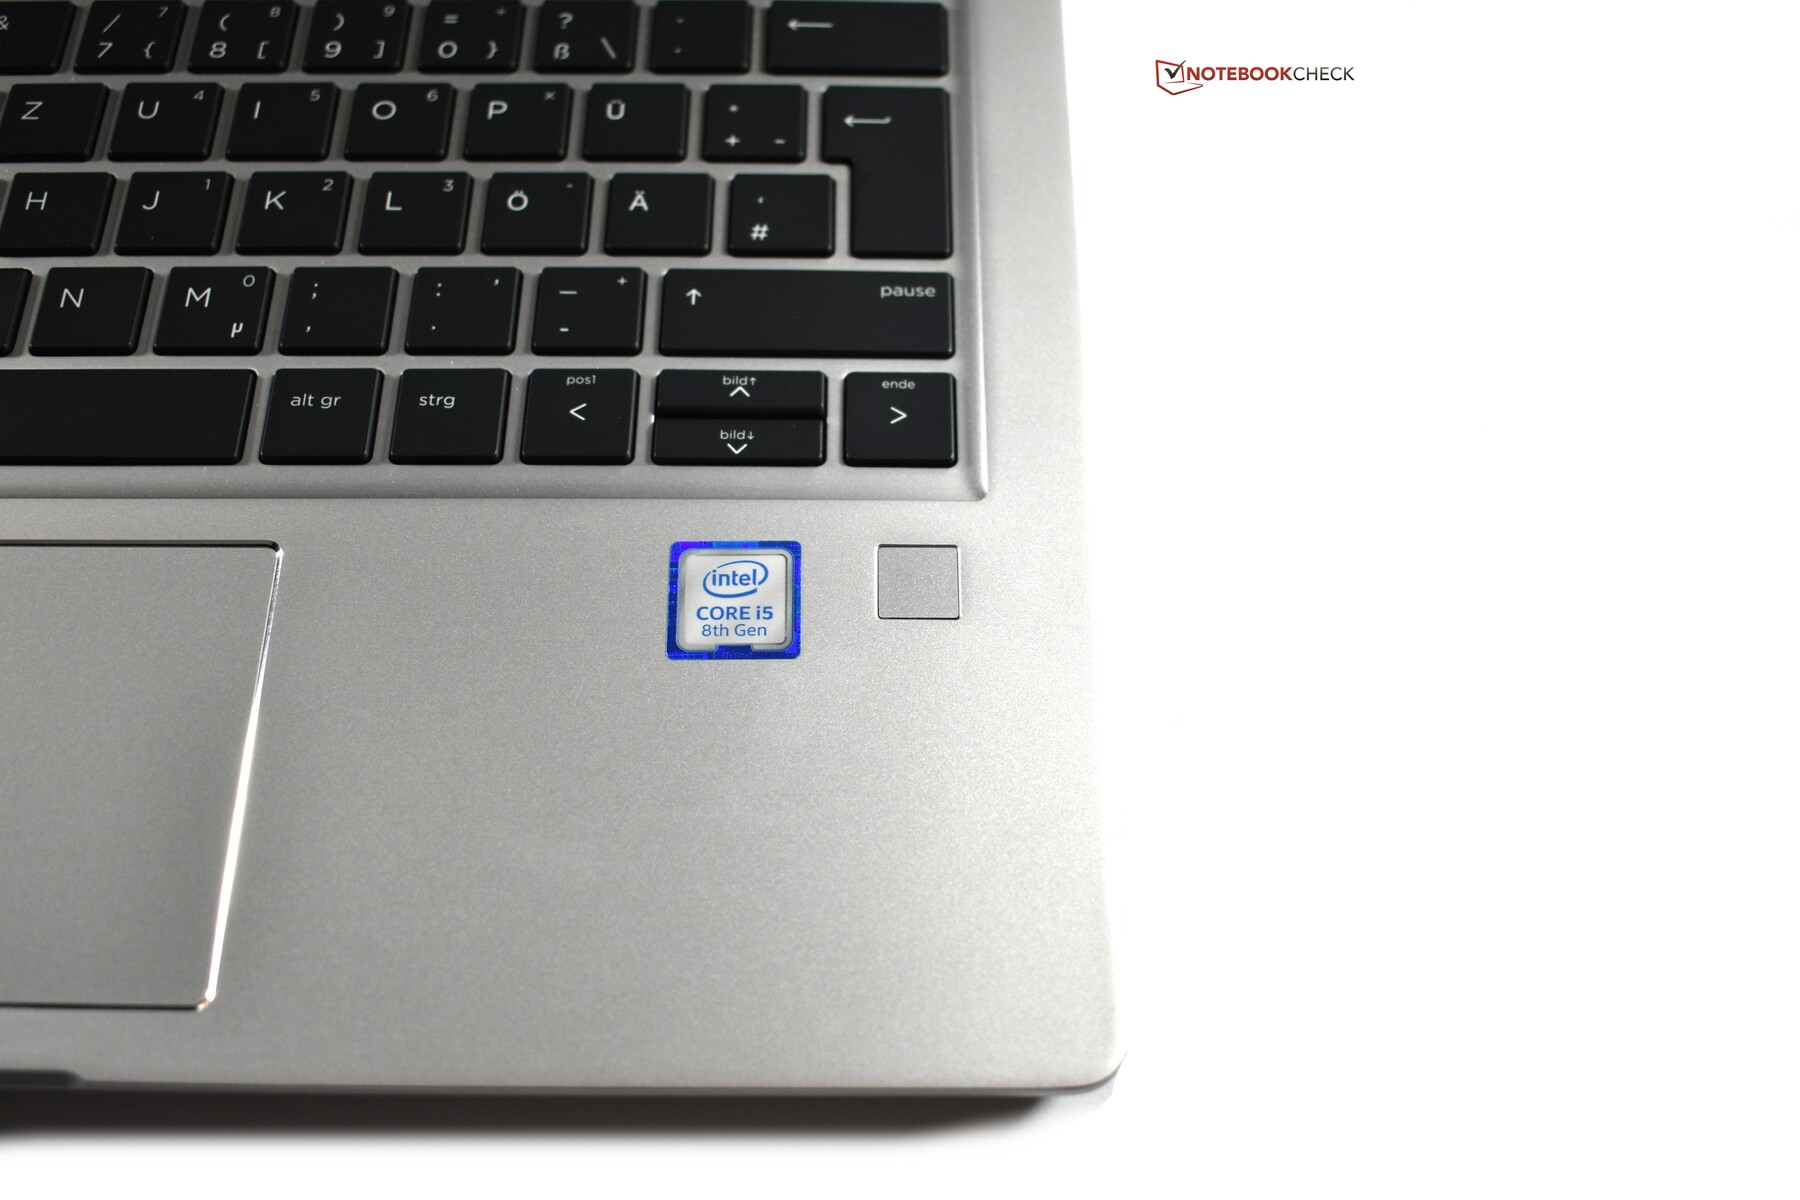 Ноутбук Hp Probook 450 G6 Цена